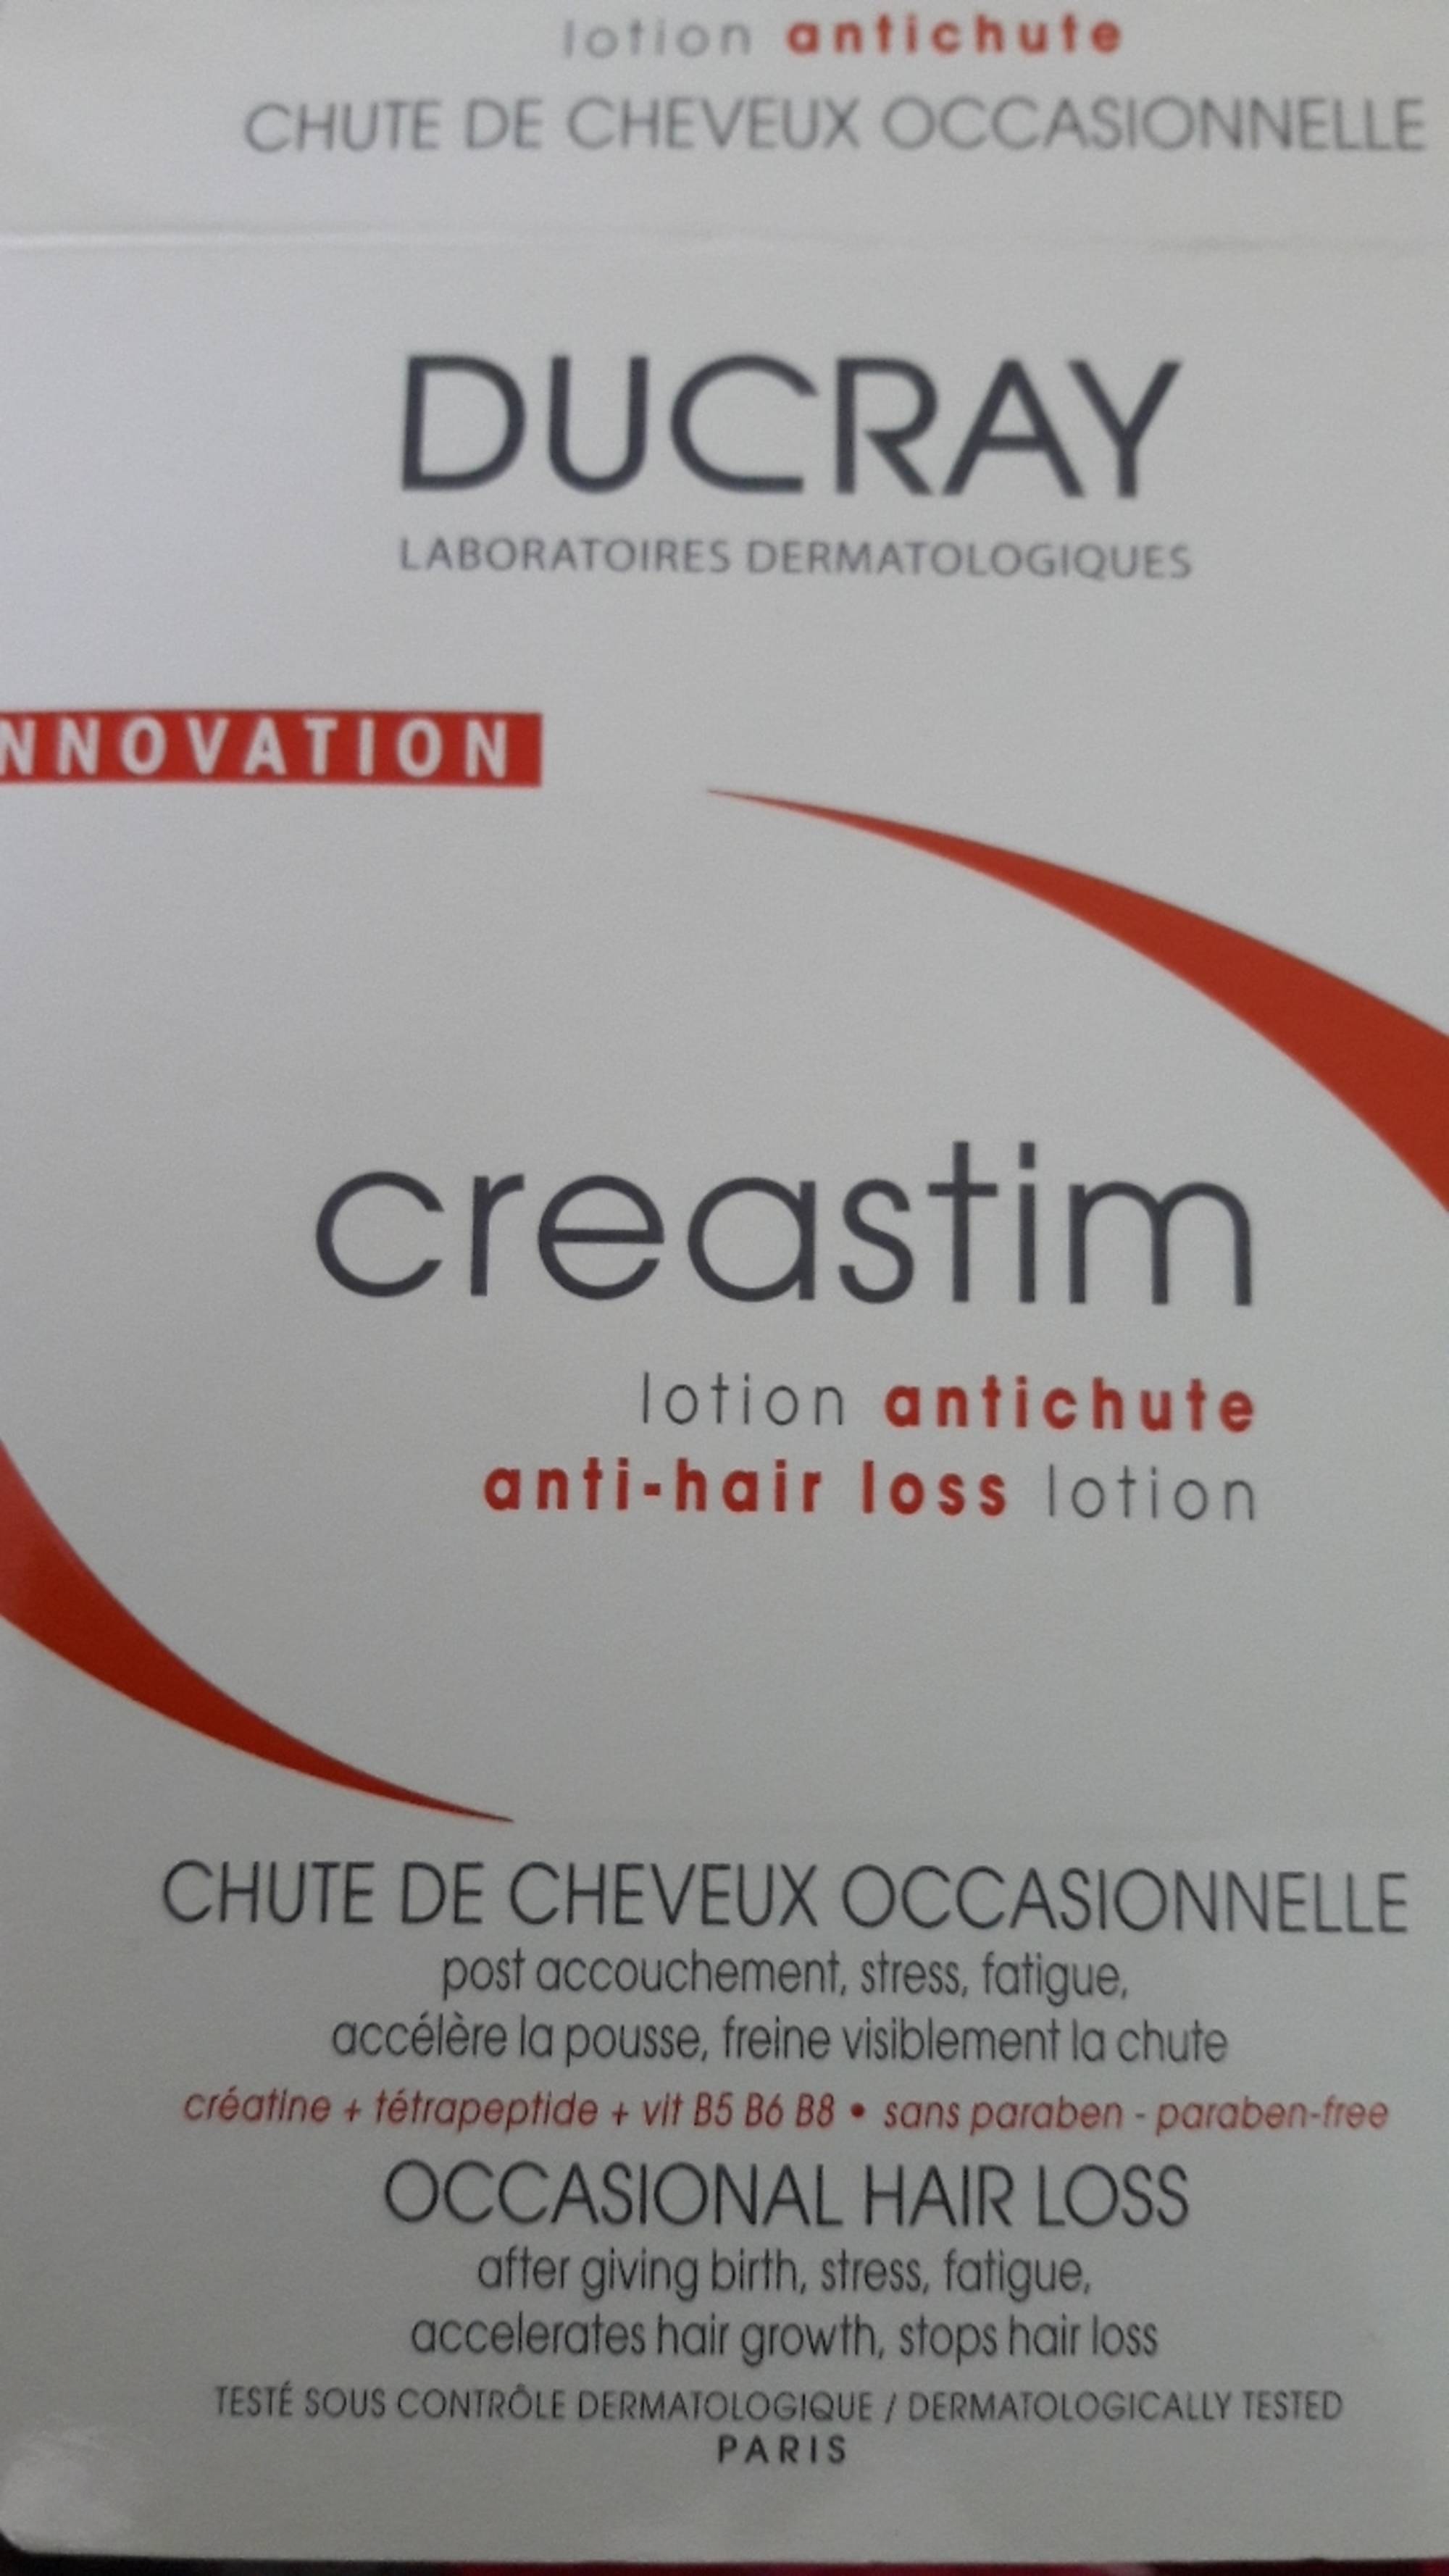 DUCRAY - Creastim - Lotion antichute